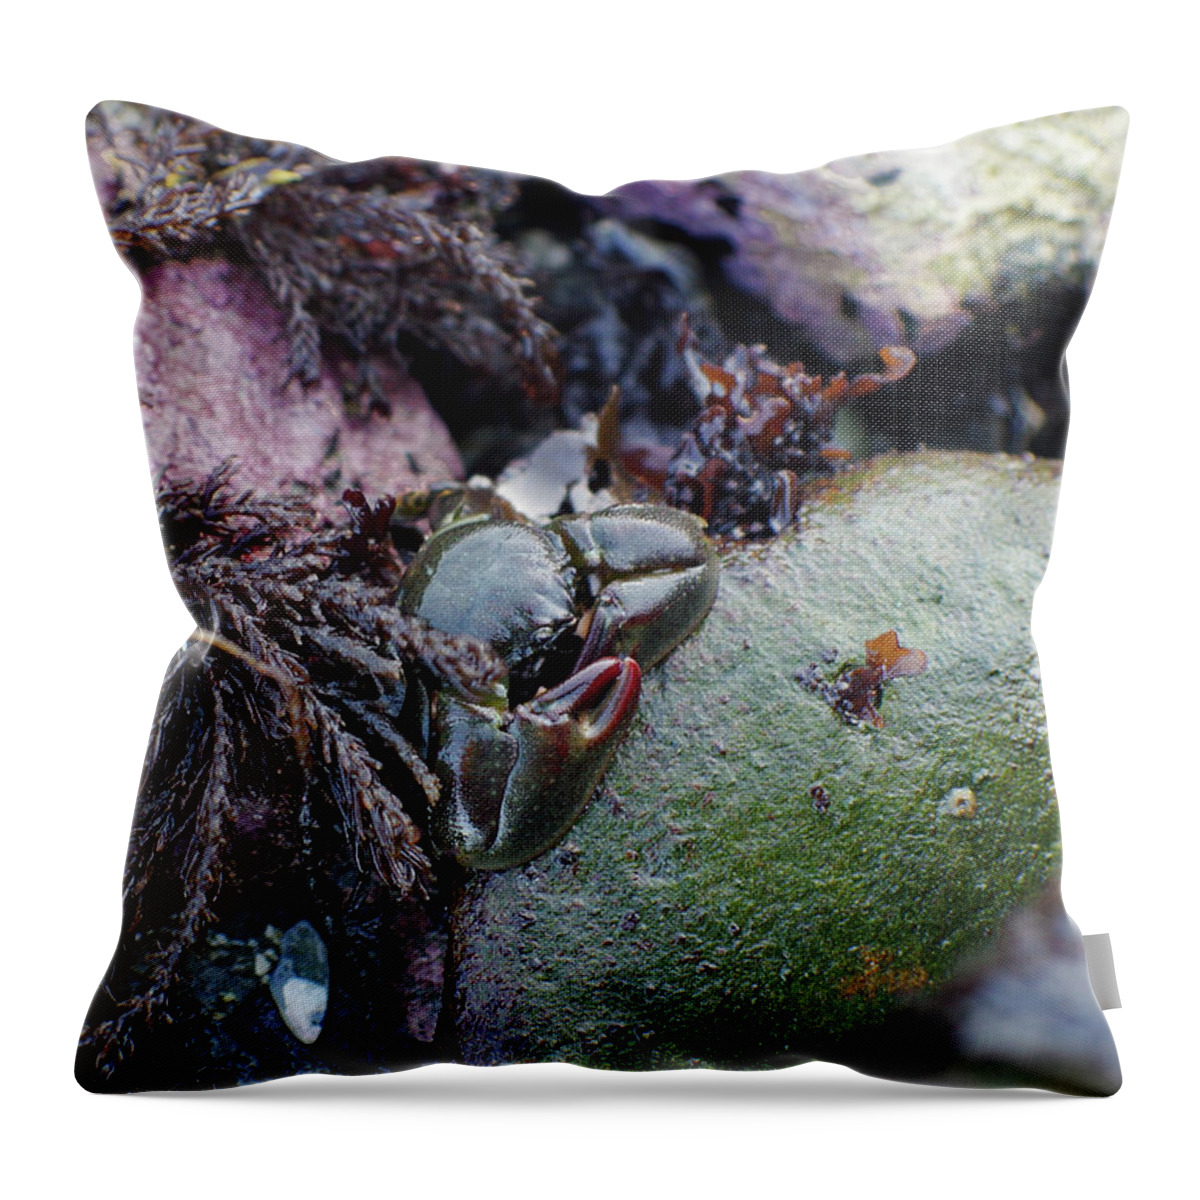 Adria Trail Throw Pillow featuring the photograph Kelp Crab by Adria Trail